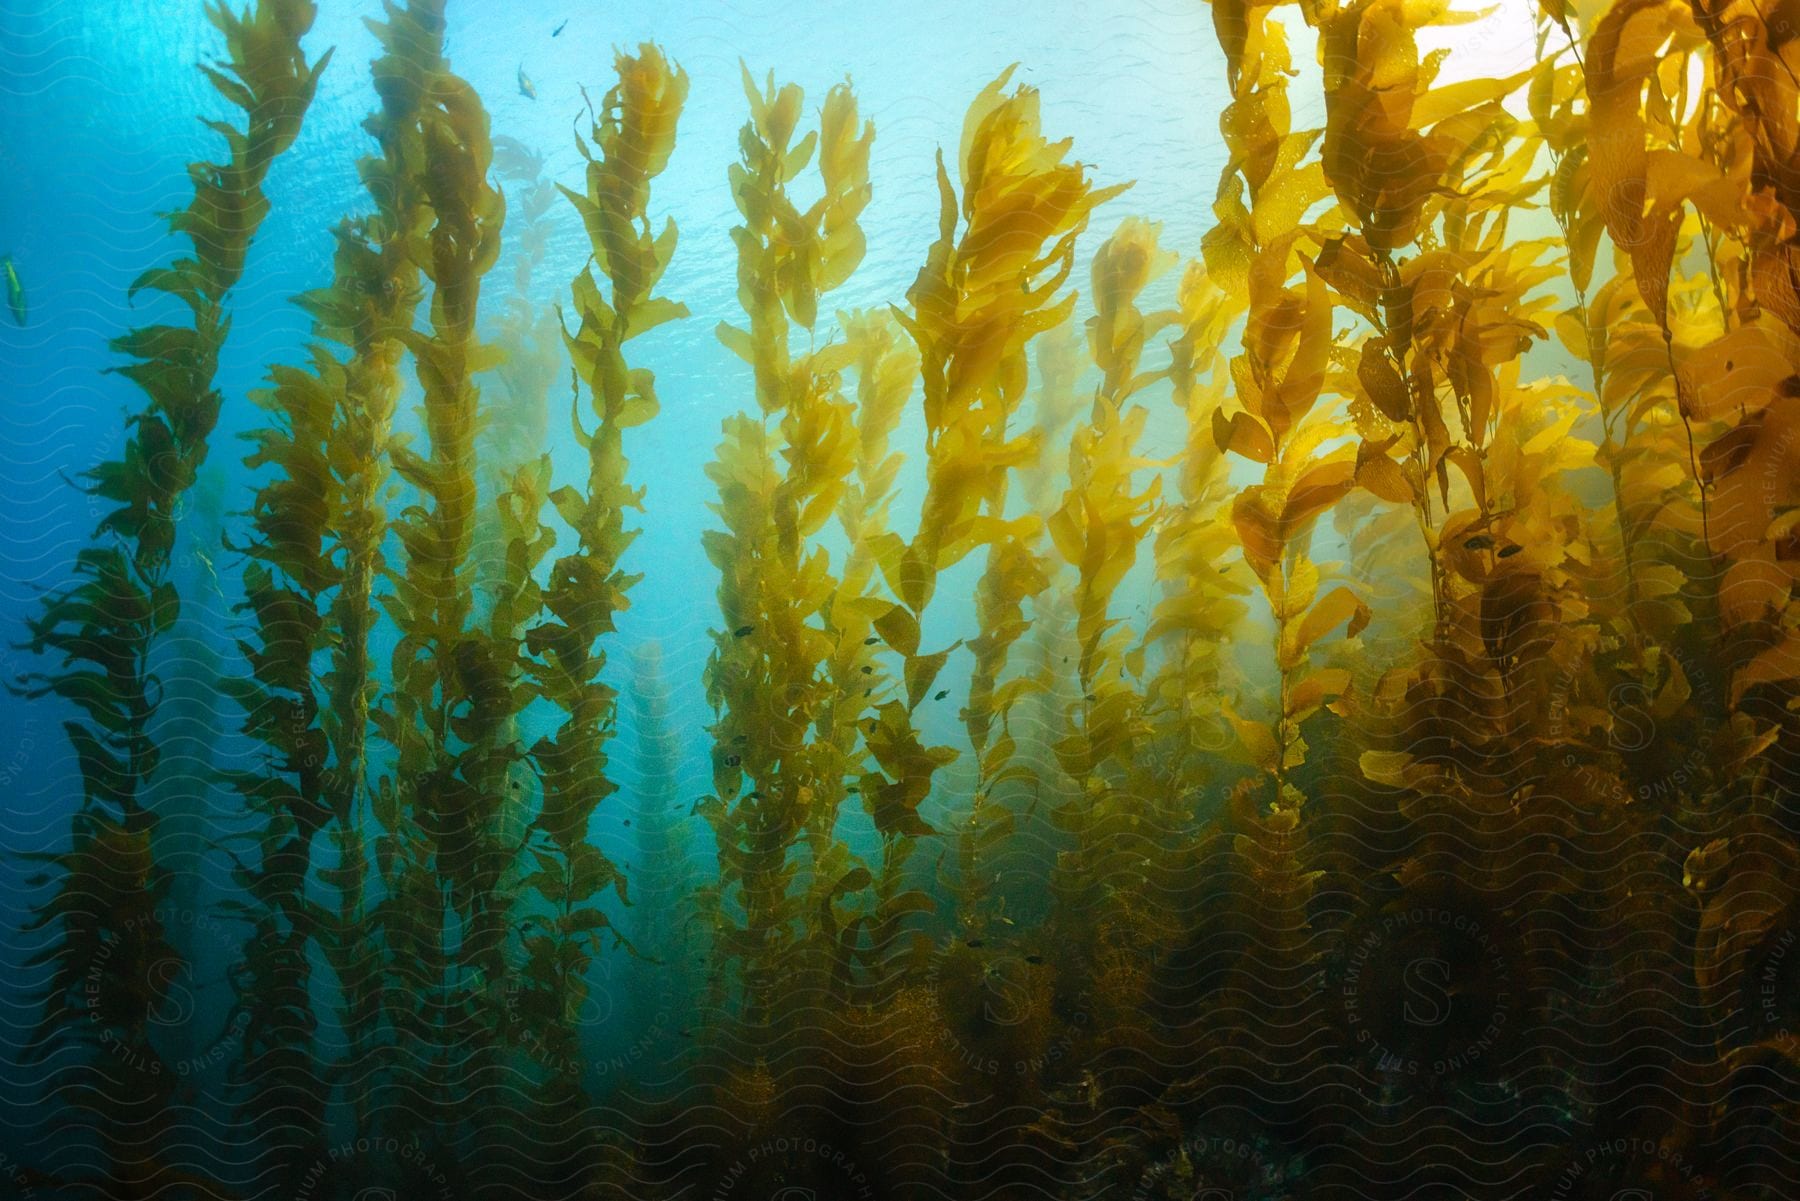 Underwater seaweed in a natural aquatic environment